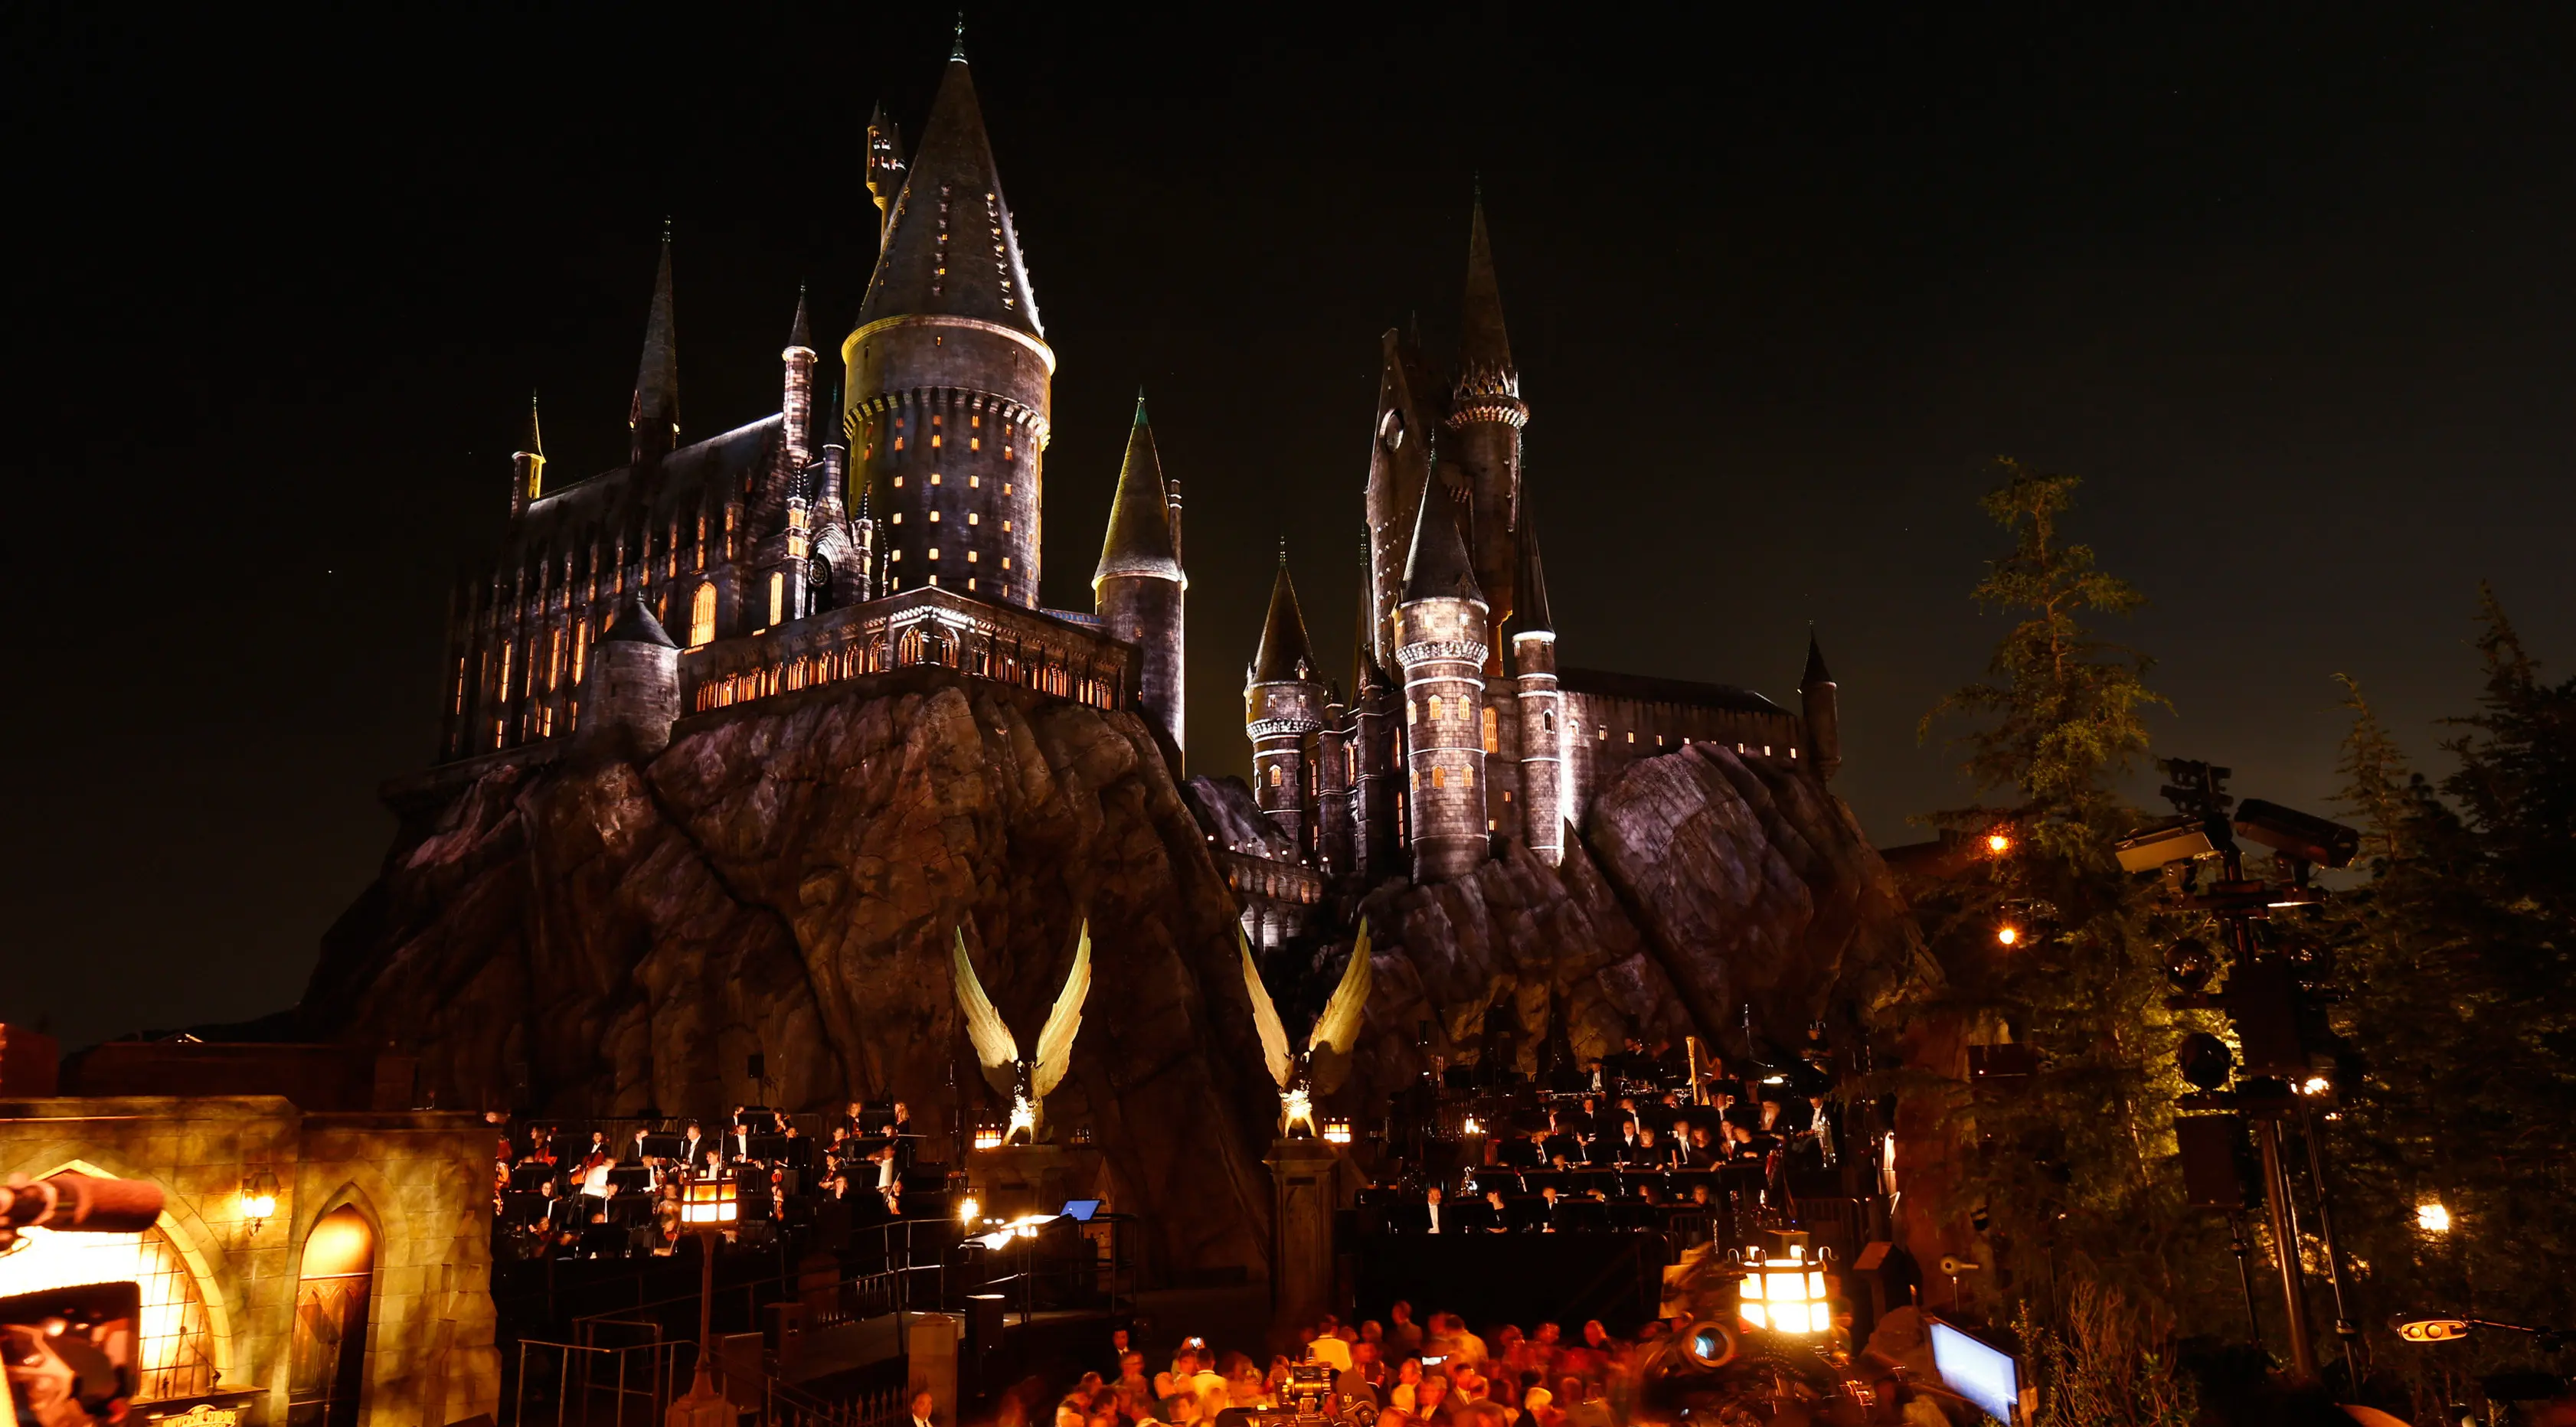 Pengunjung menunggu untuk memasuki Hogwarts Castle selama pembukaan dari " The Wizarding World of Harry Potter " Universal Studios Hollywood di Universal City, California, (5/4). Bangunan ini terinspirasi dari film Harry Potter. (REUTERS / Mario Anzuoni)